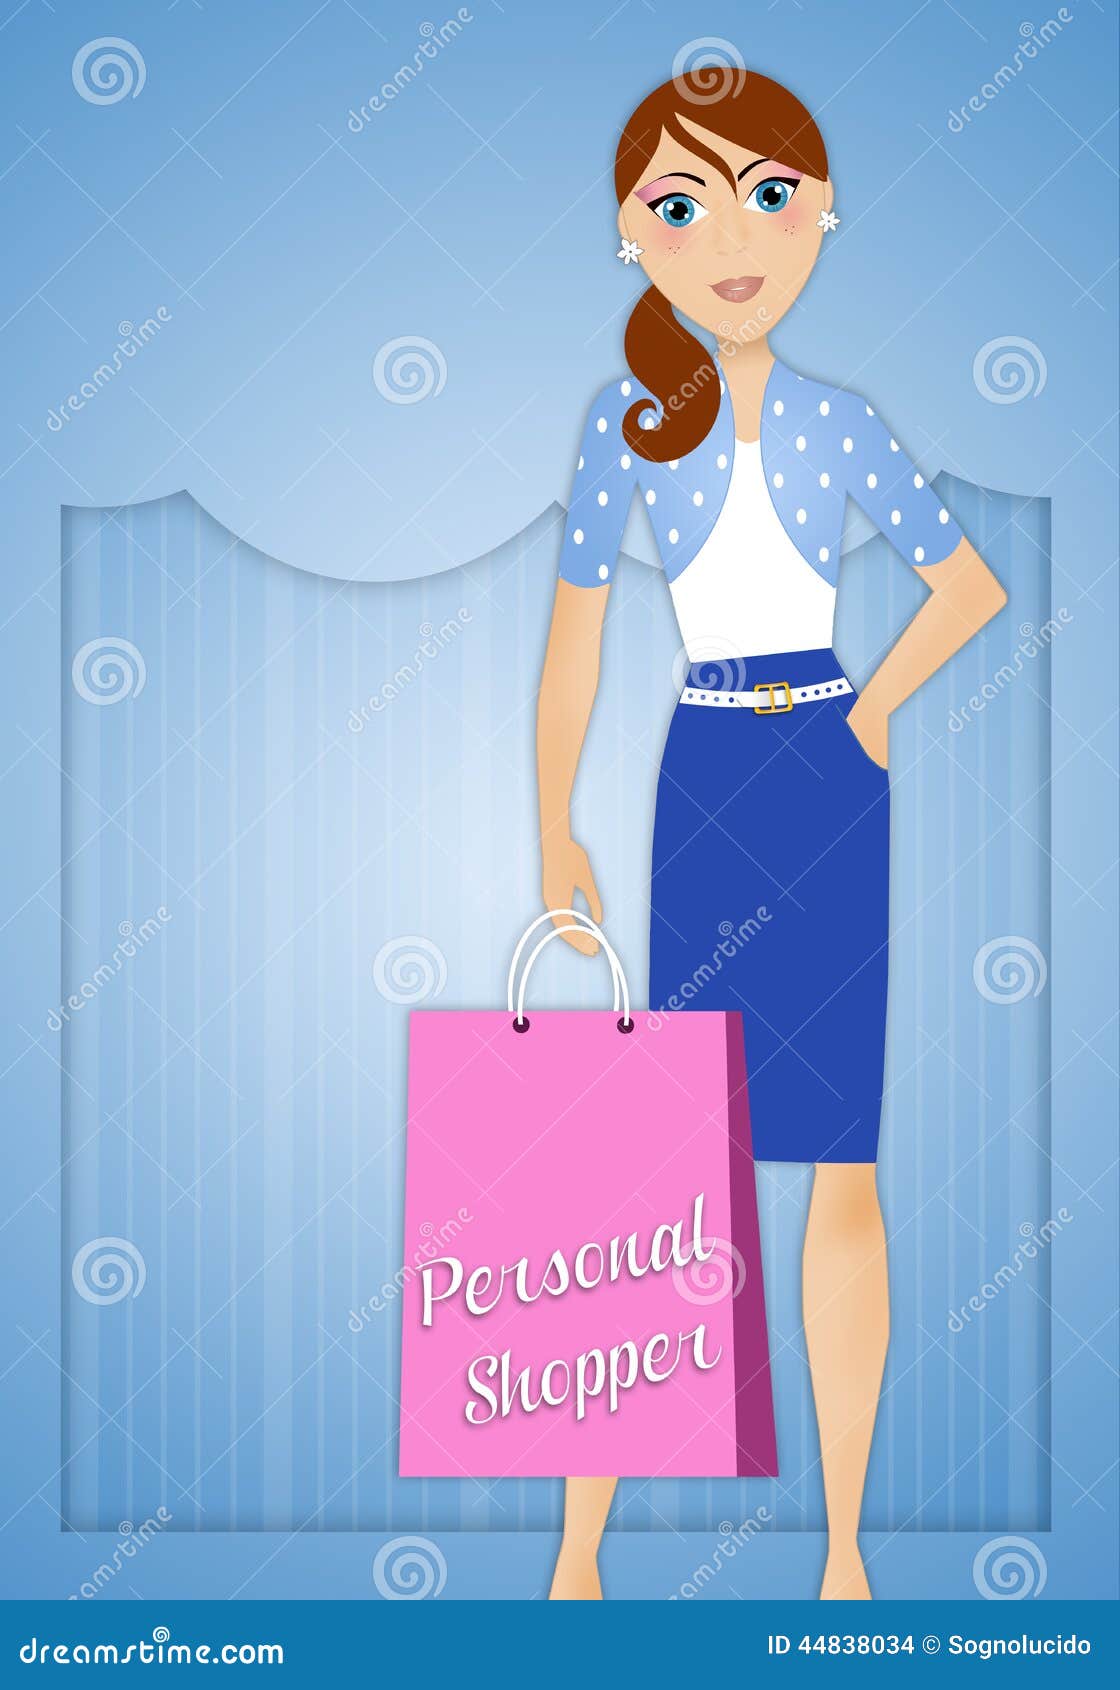 Personal shopper stock illustration. Illustration of lifestyle